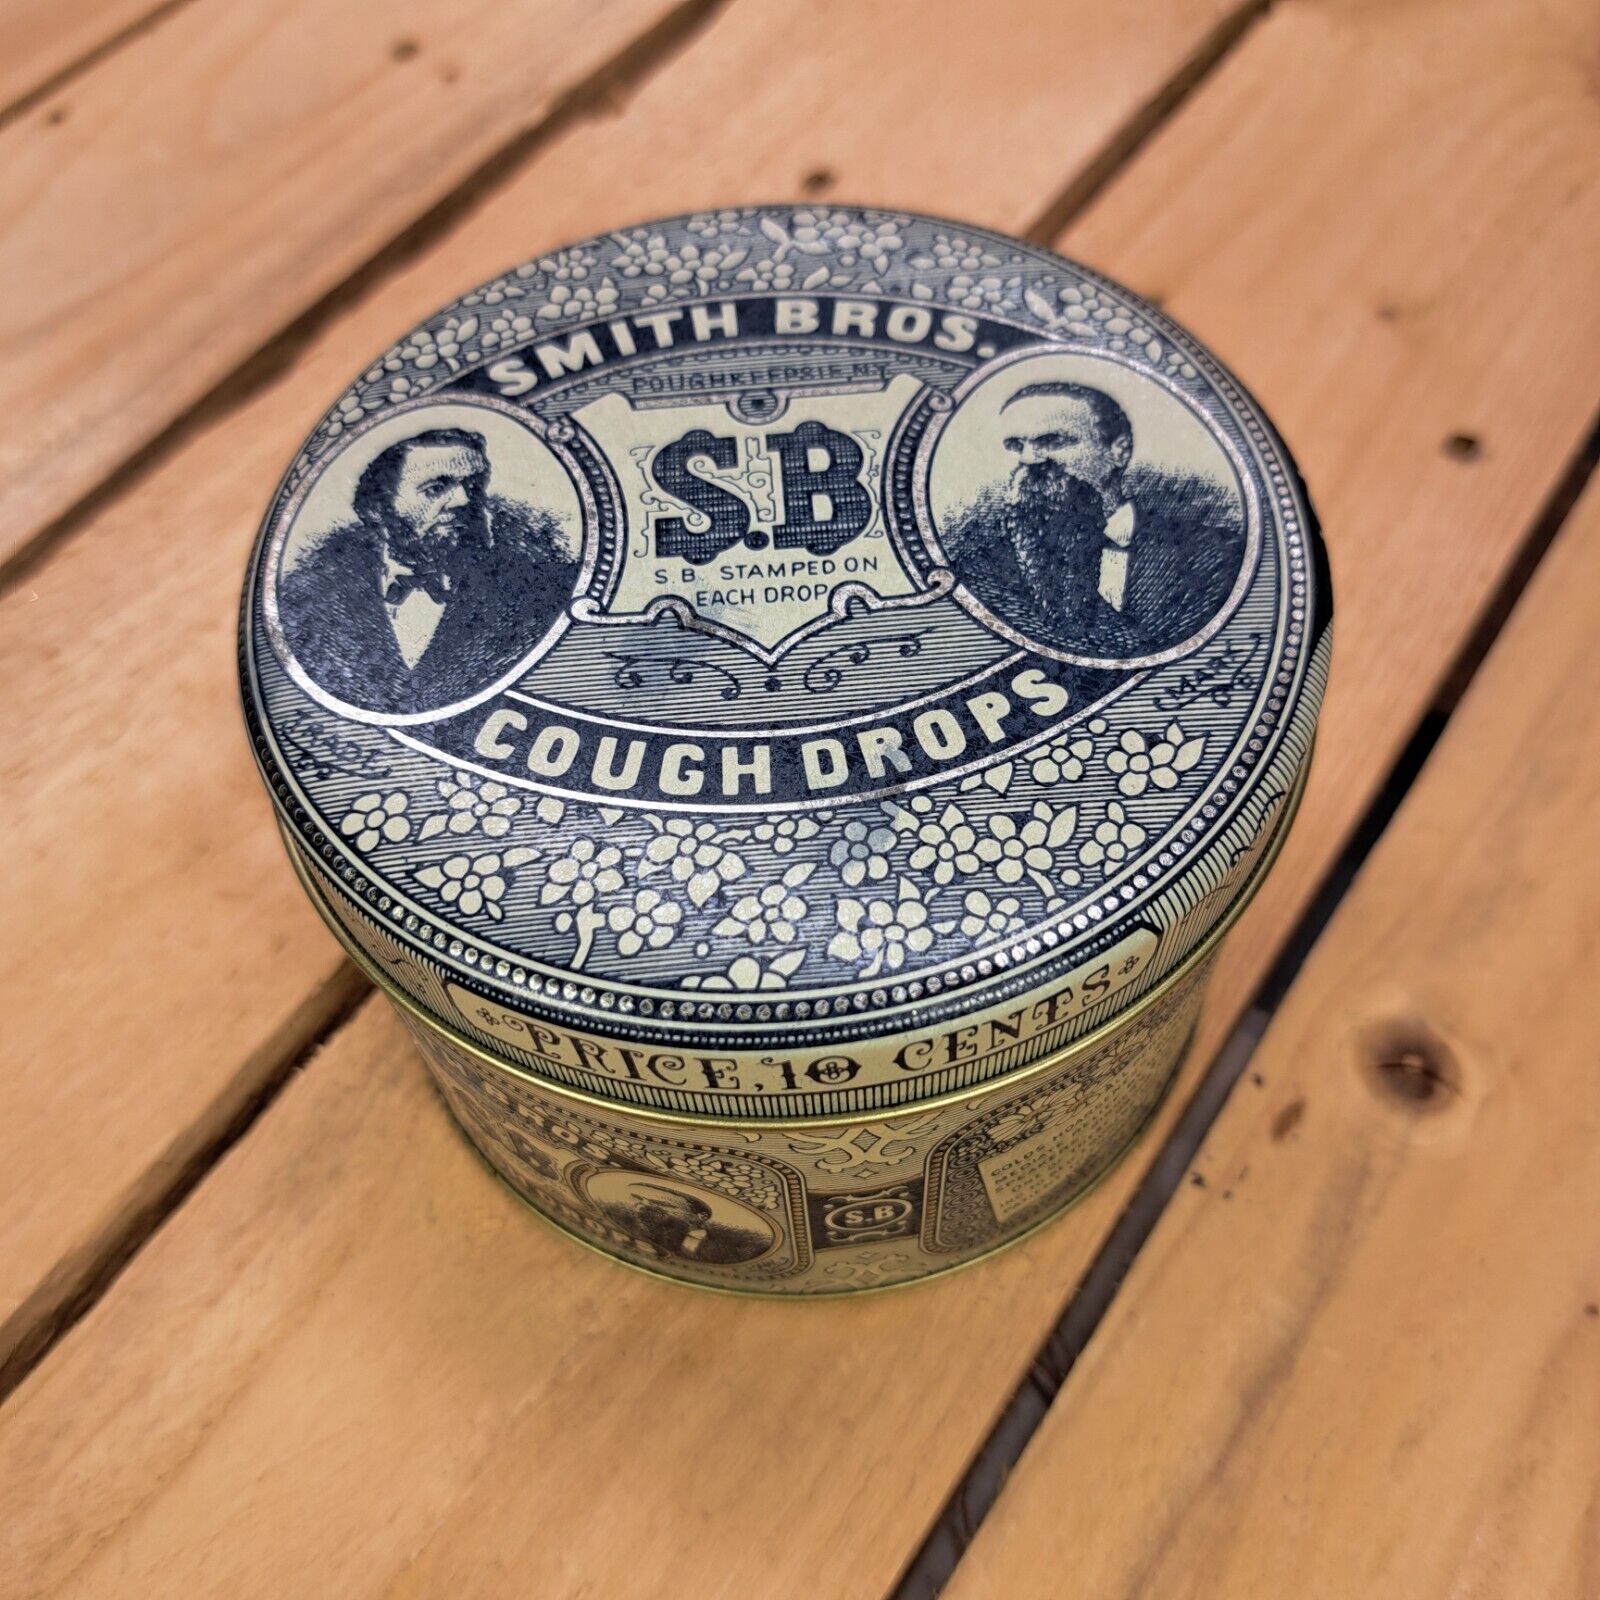 Vintage Smith Bros. Round Cough Drops Price 10 Cents Tin (EMPTY)